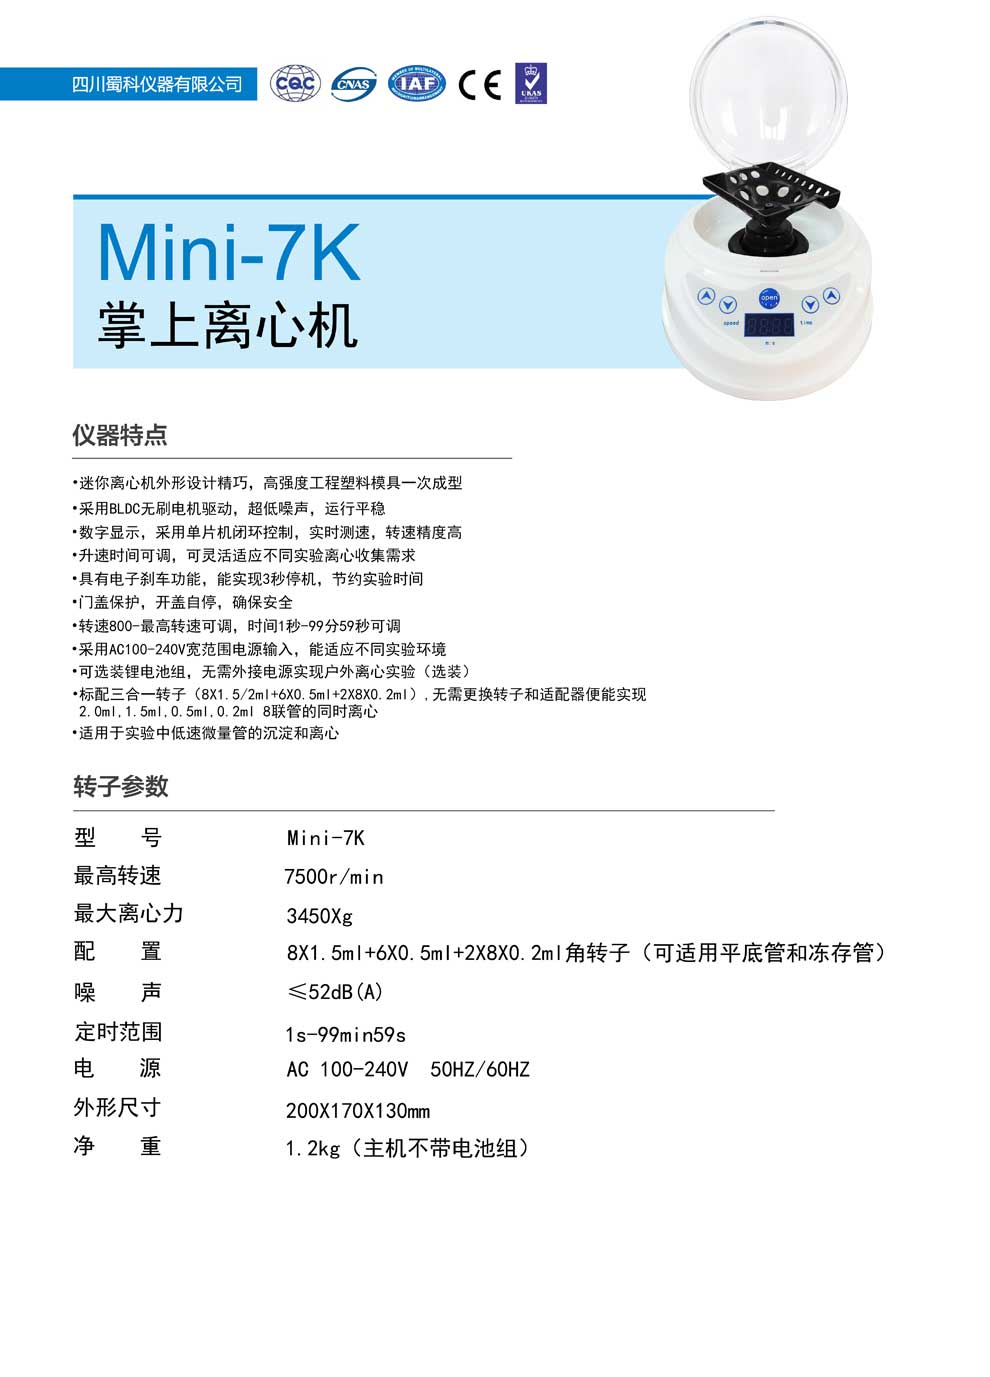 Mini-7K-彩页.jpg